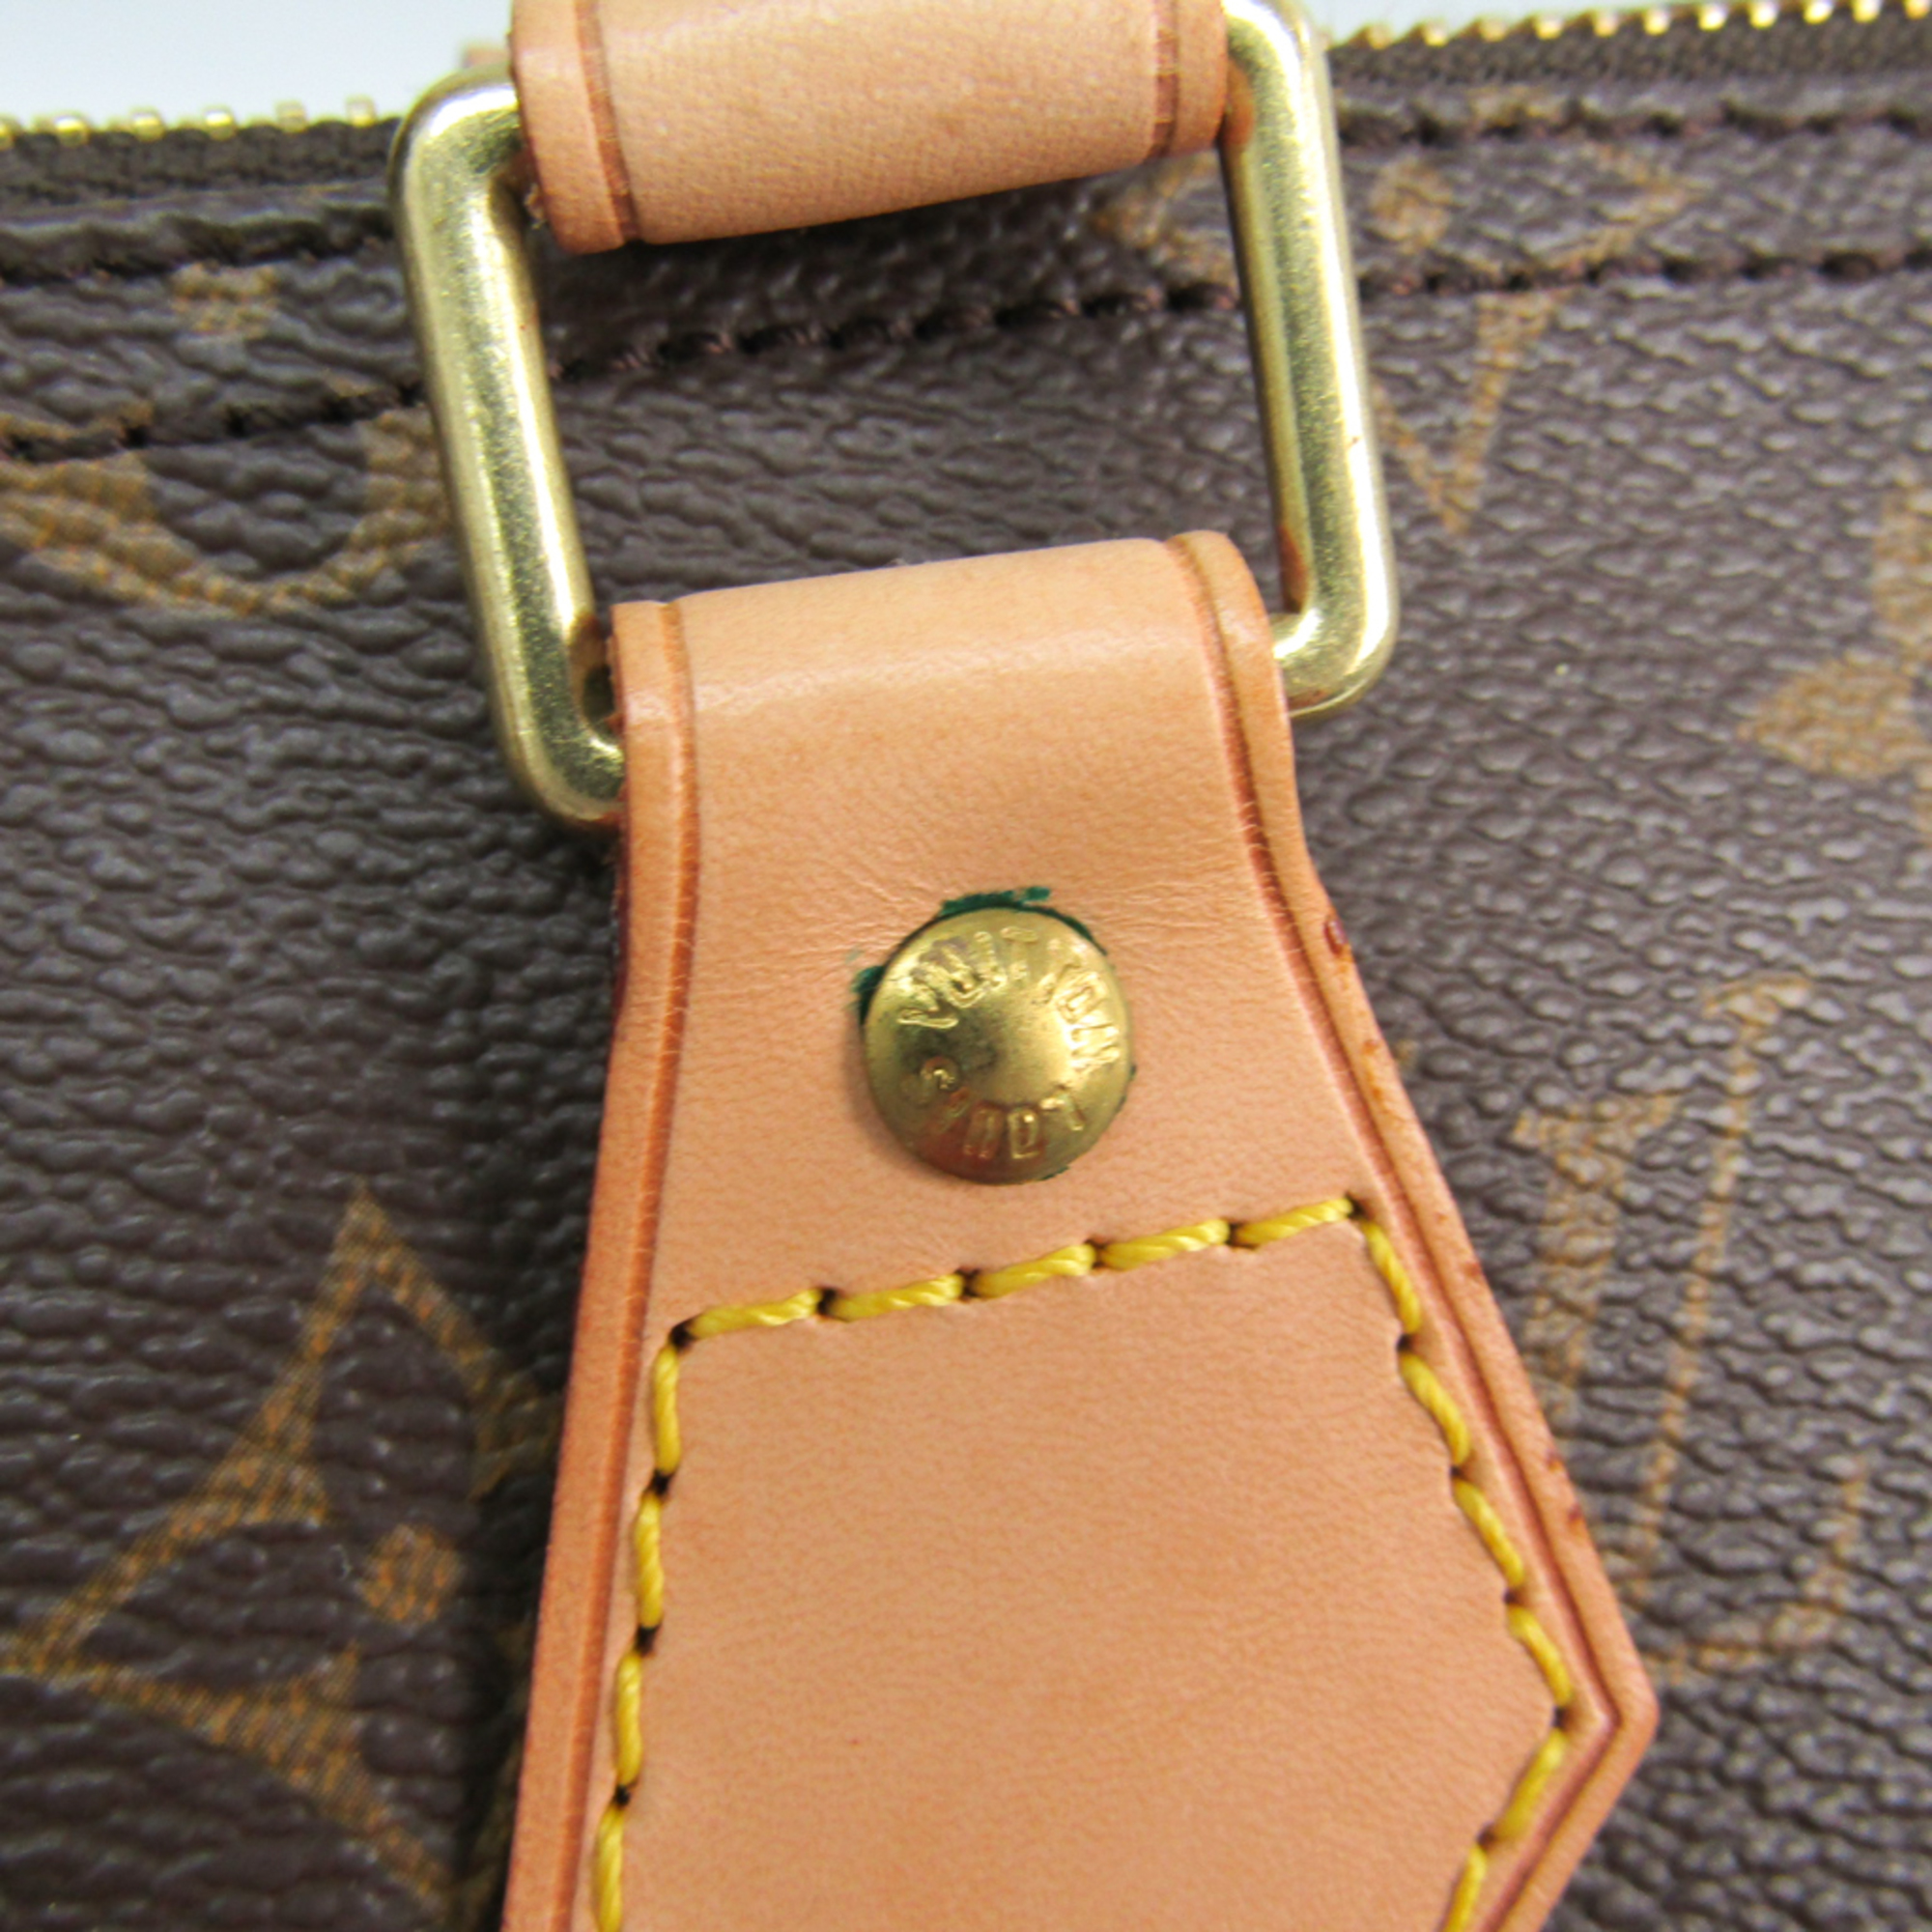 Louis Vuitton Monogram Speedy 35 M41524 Women's Handbag Monogram